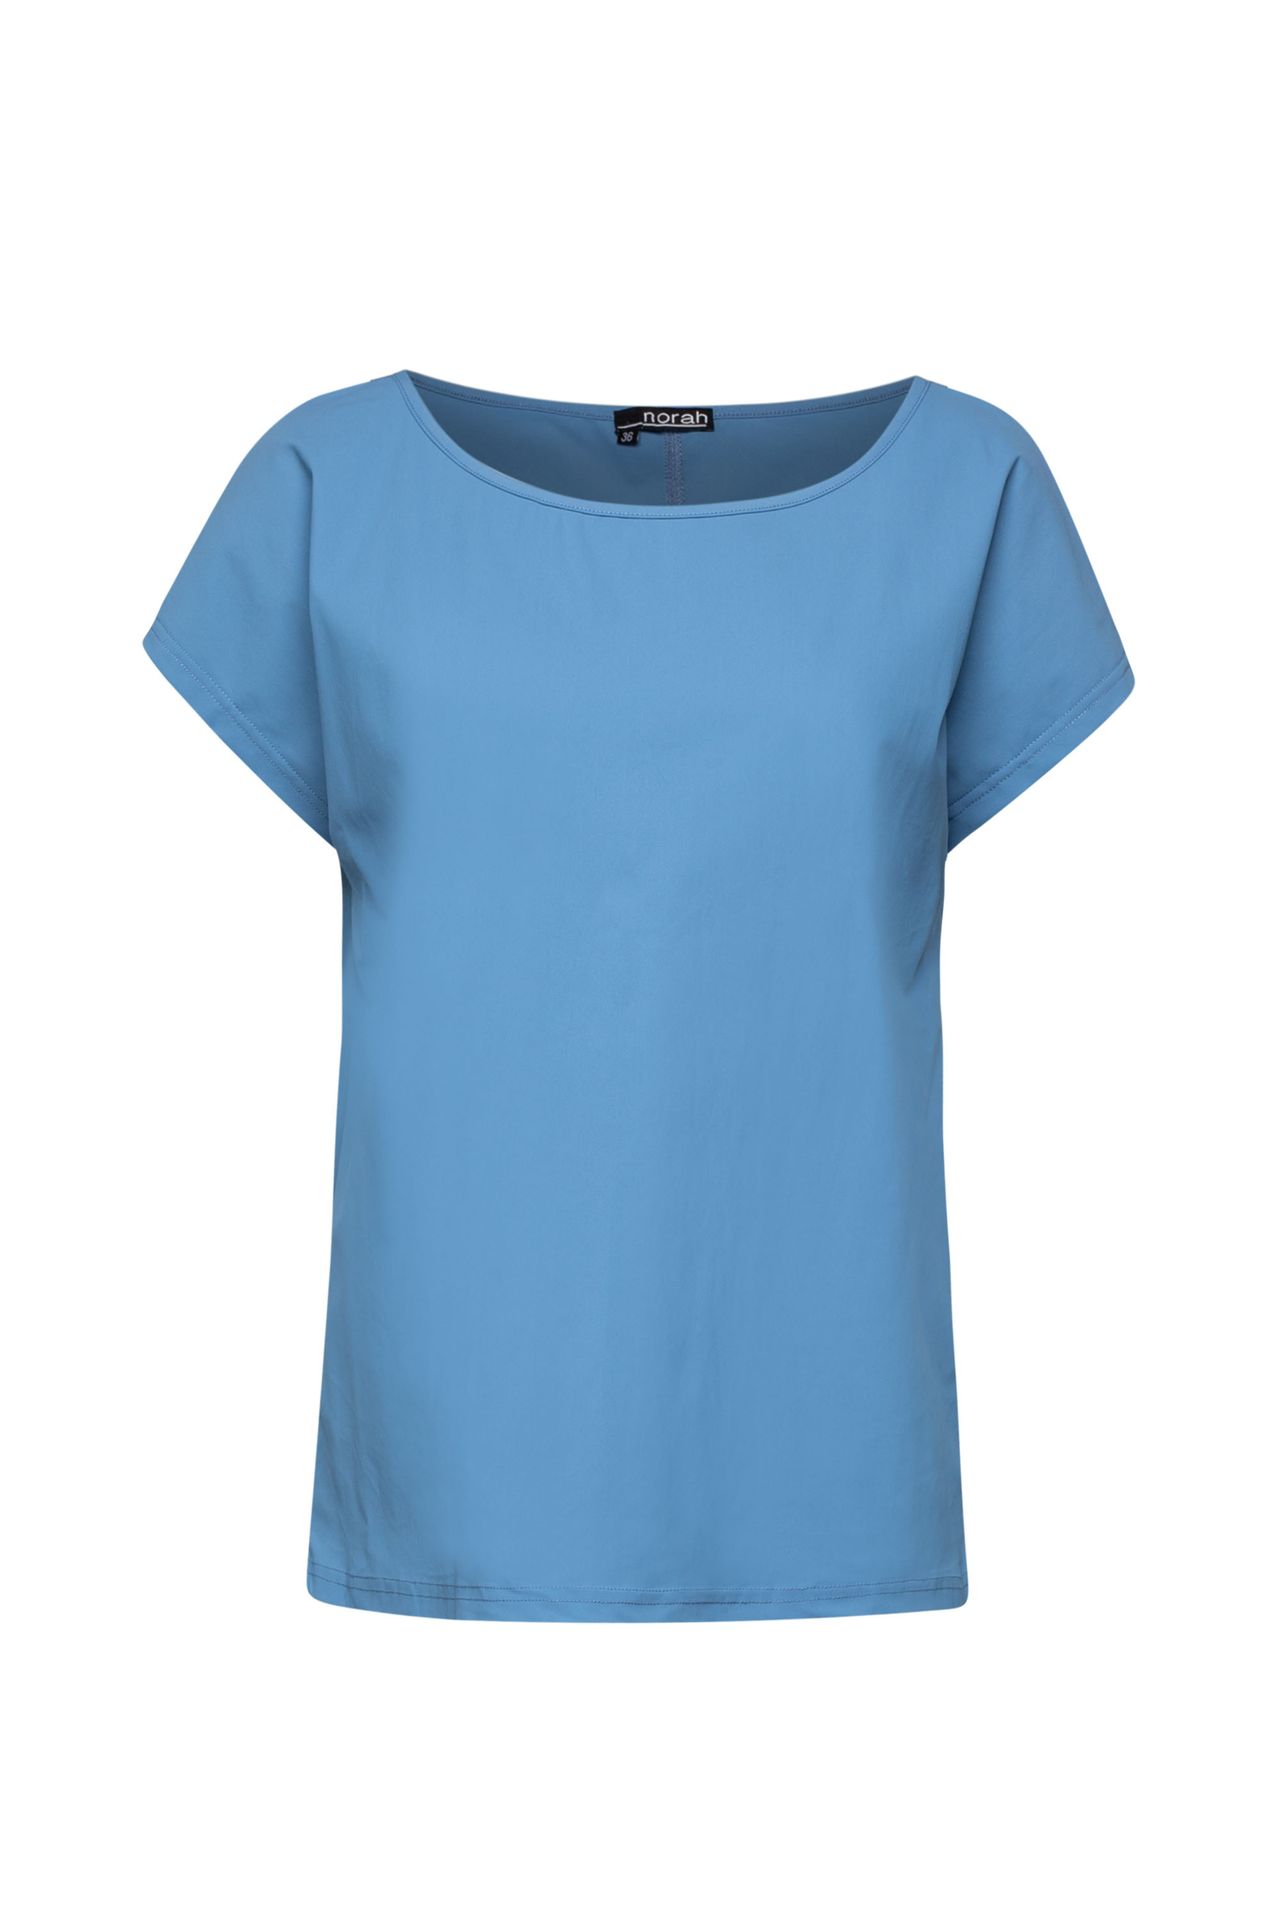 Norah Shirt blauw travelstof denim blue 211418-472